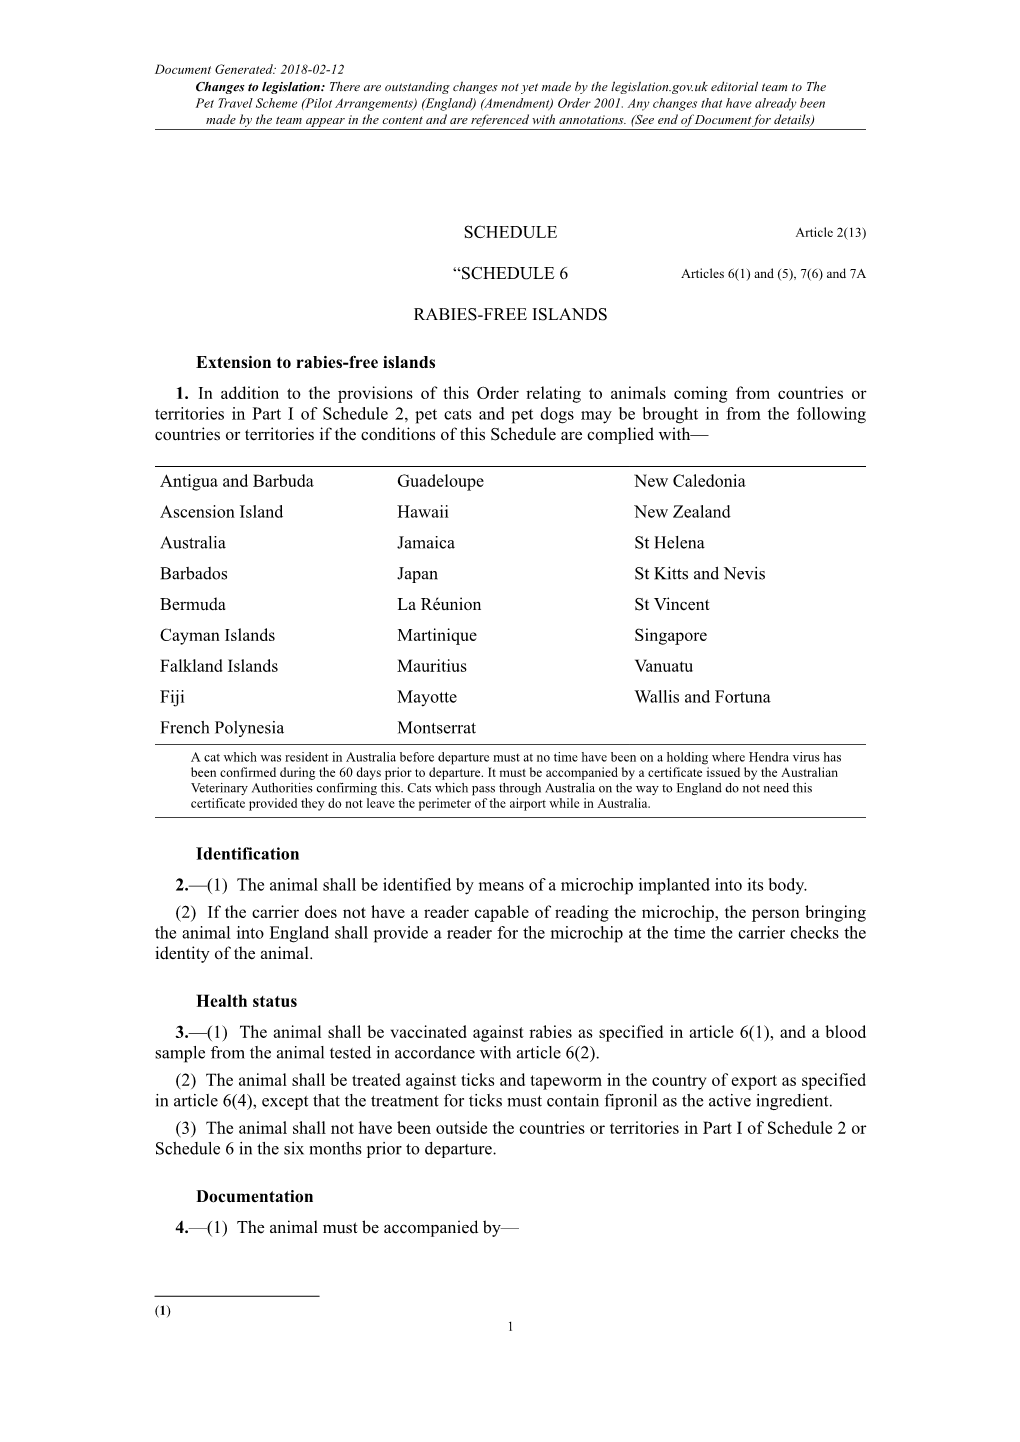 The Pet Travel Scheme (Pilot Arrangements) (England) (Amendment) Order 2001